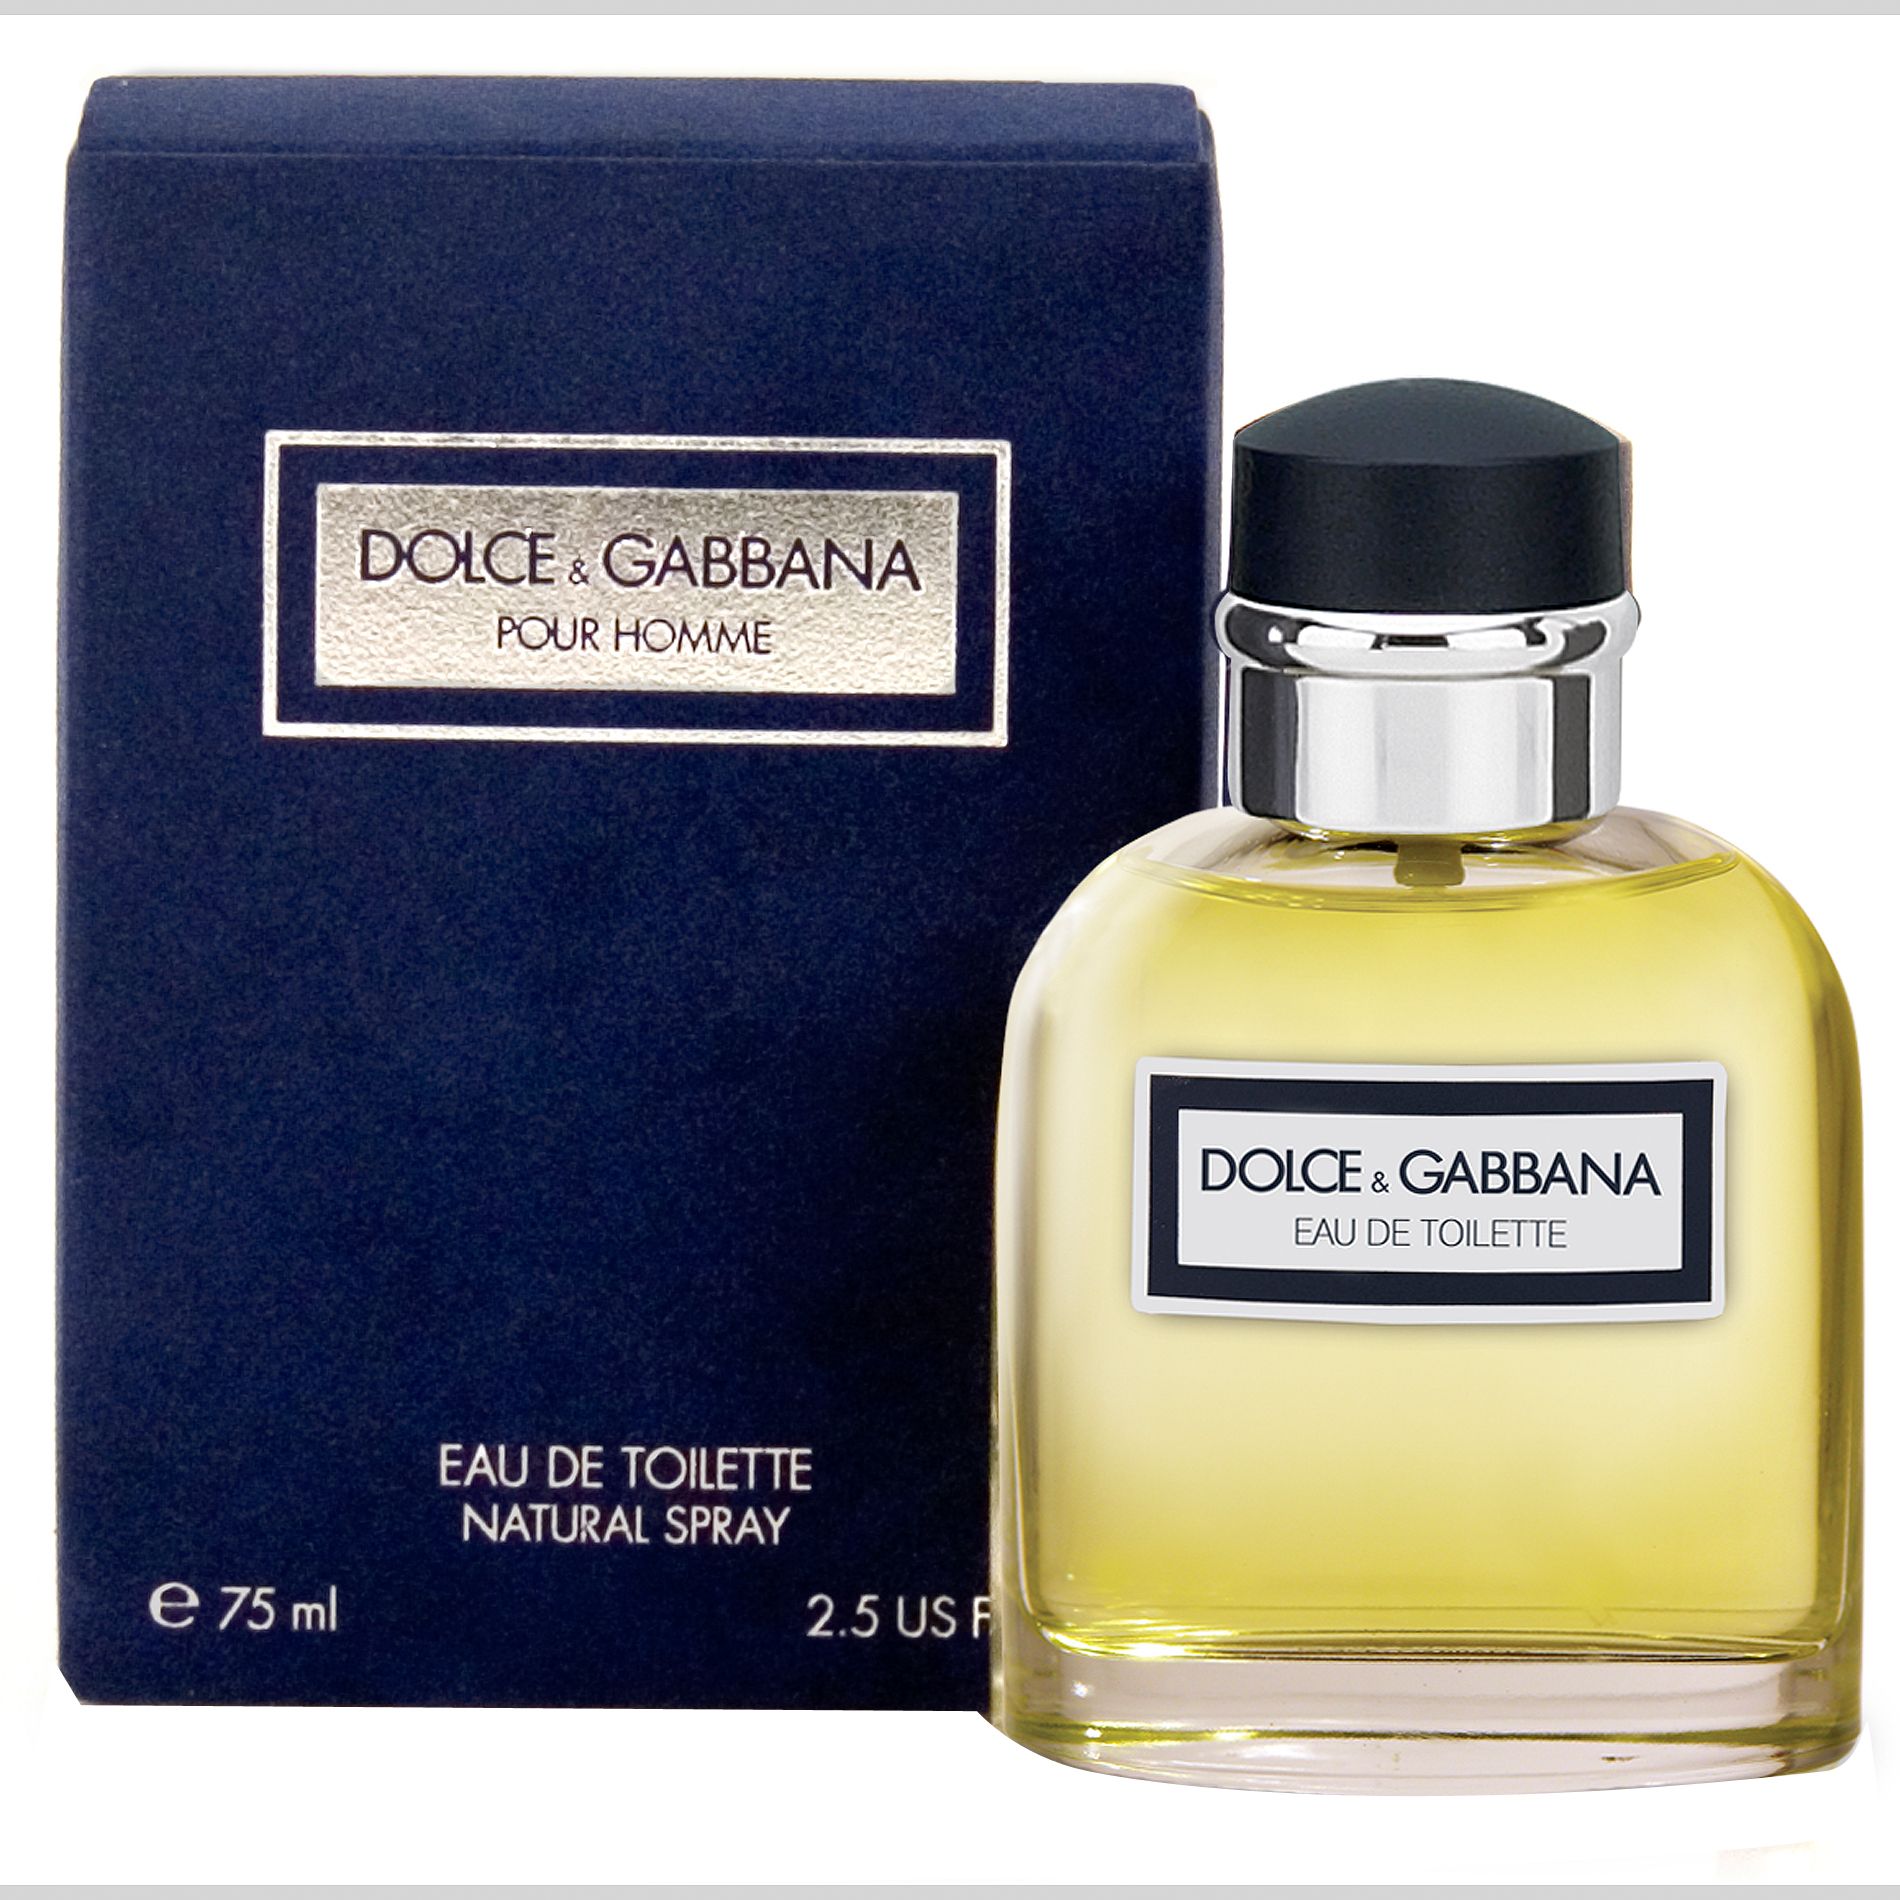 Dolce & Gabbana Men's EDT Fragrance Spray, 2.5 Oz.